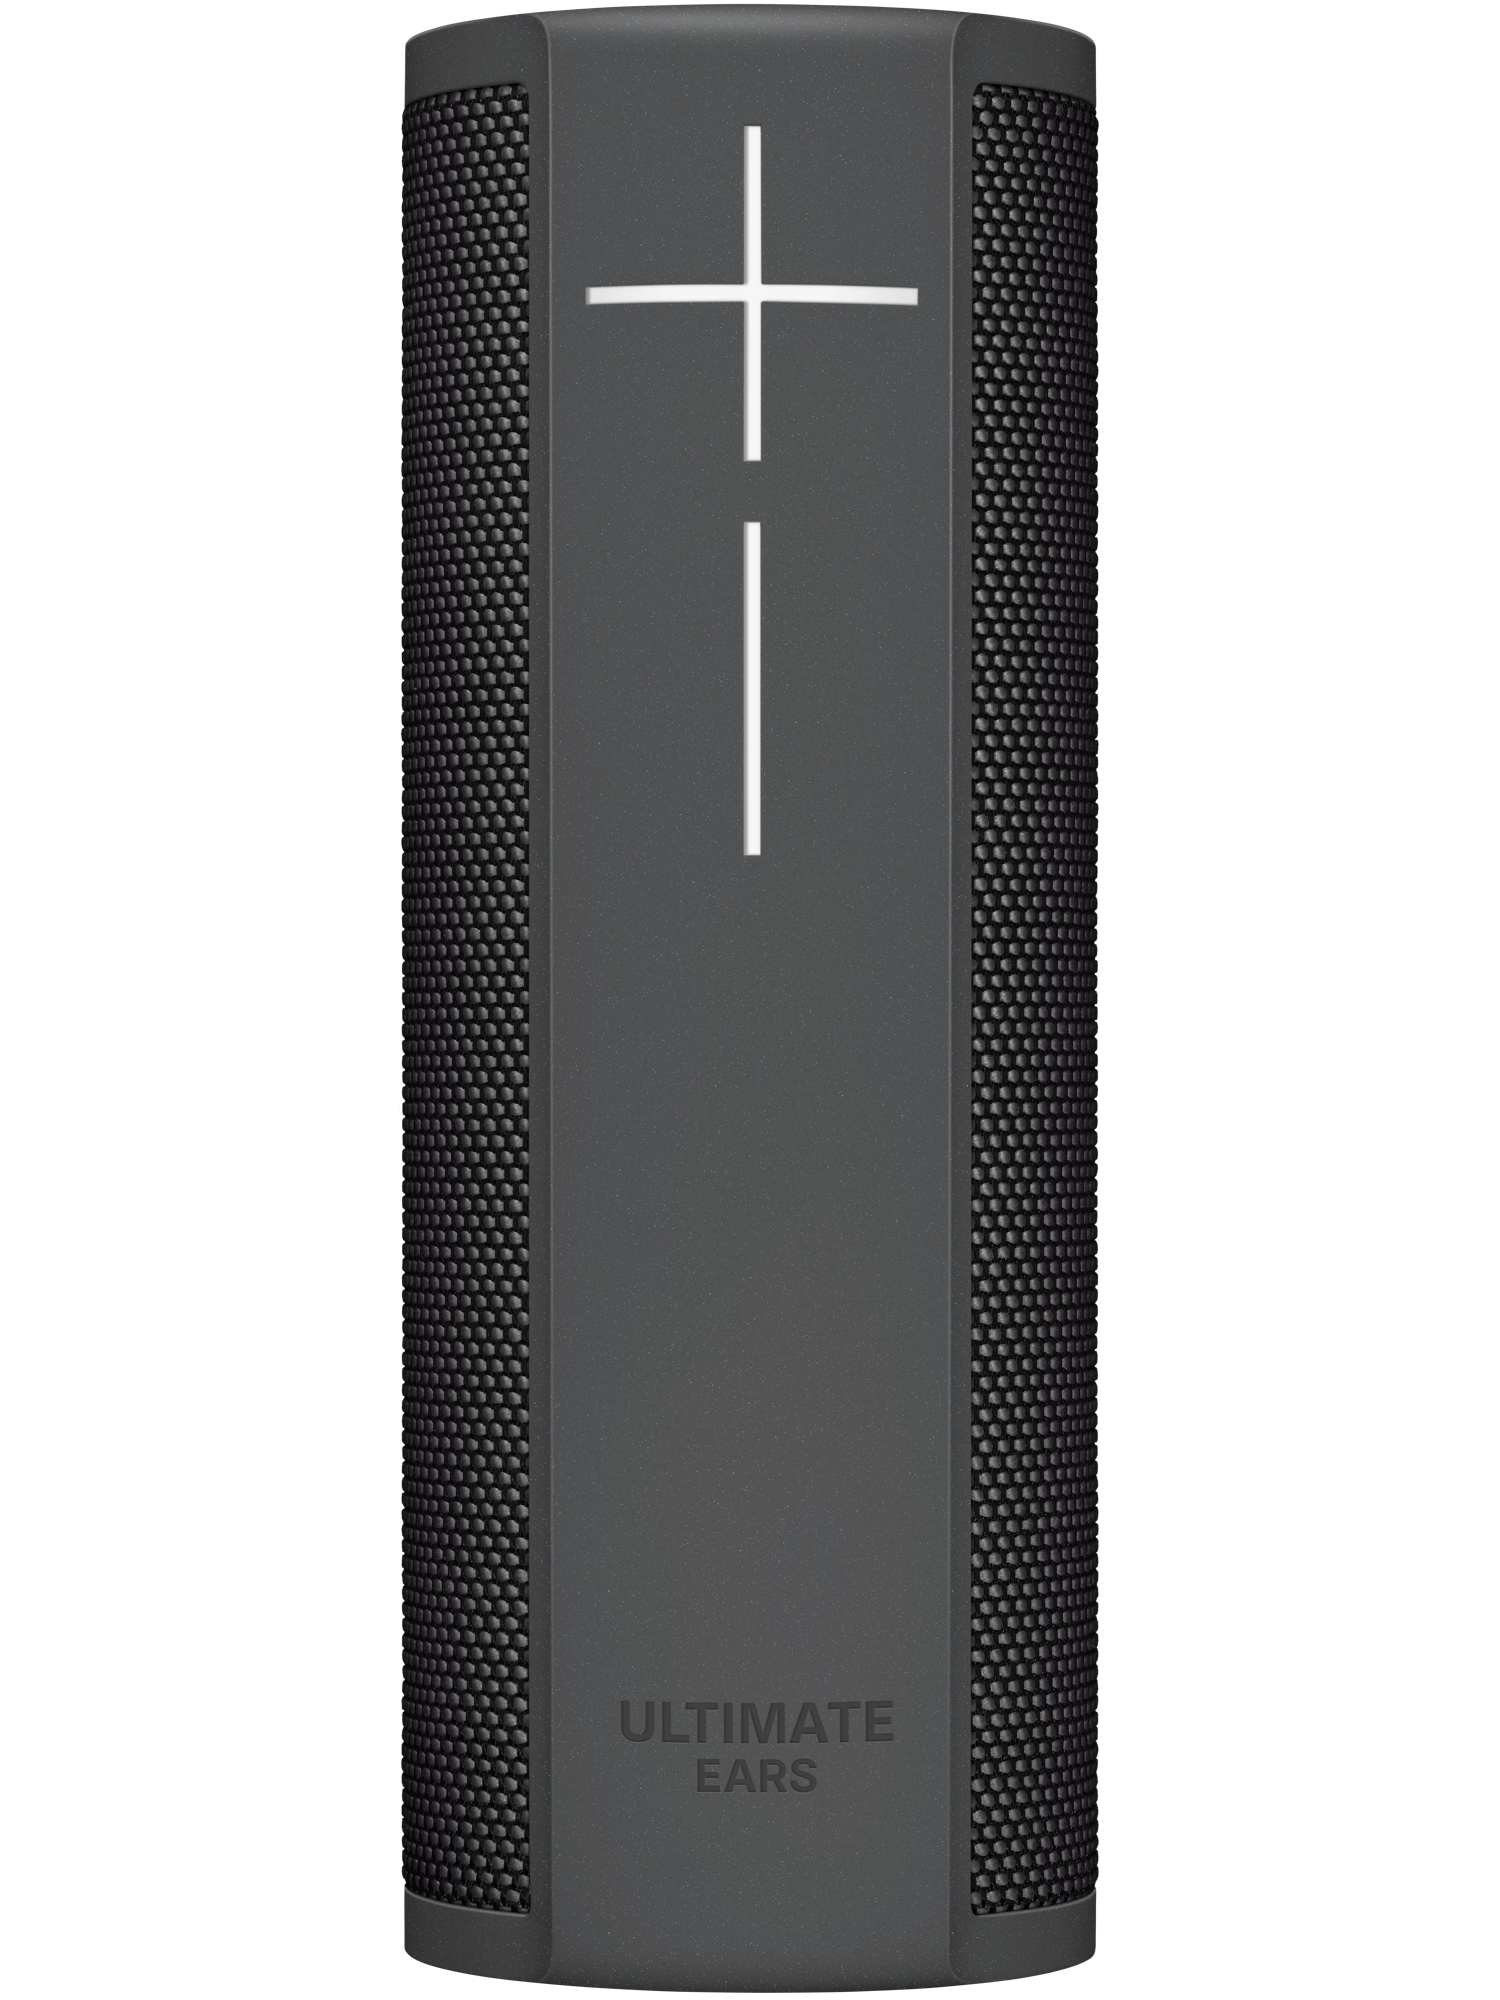 Wireless Portable Speaker with Amazon Alexa